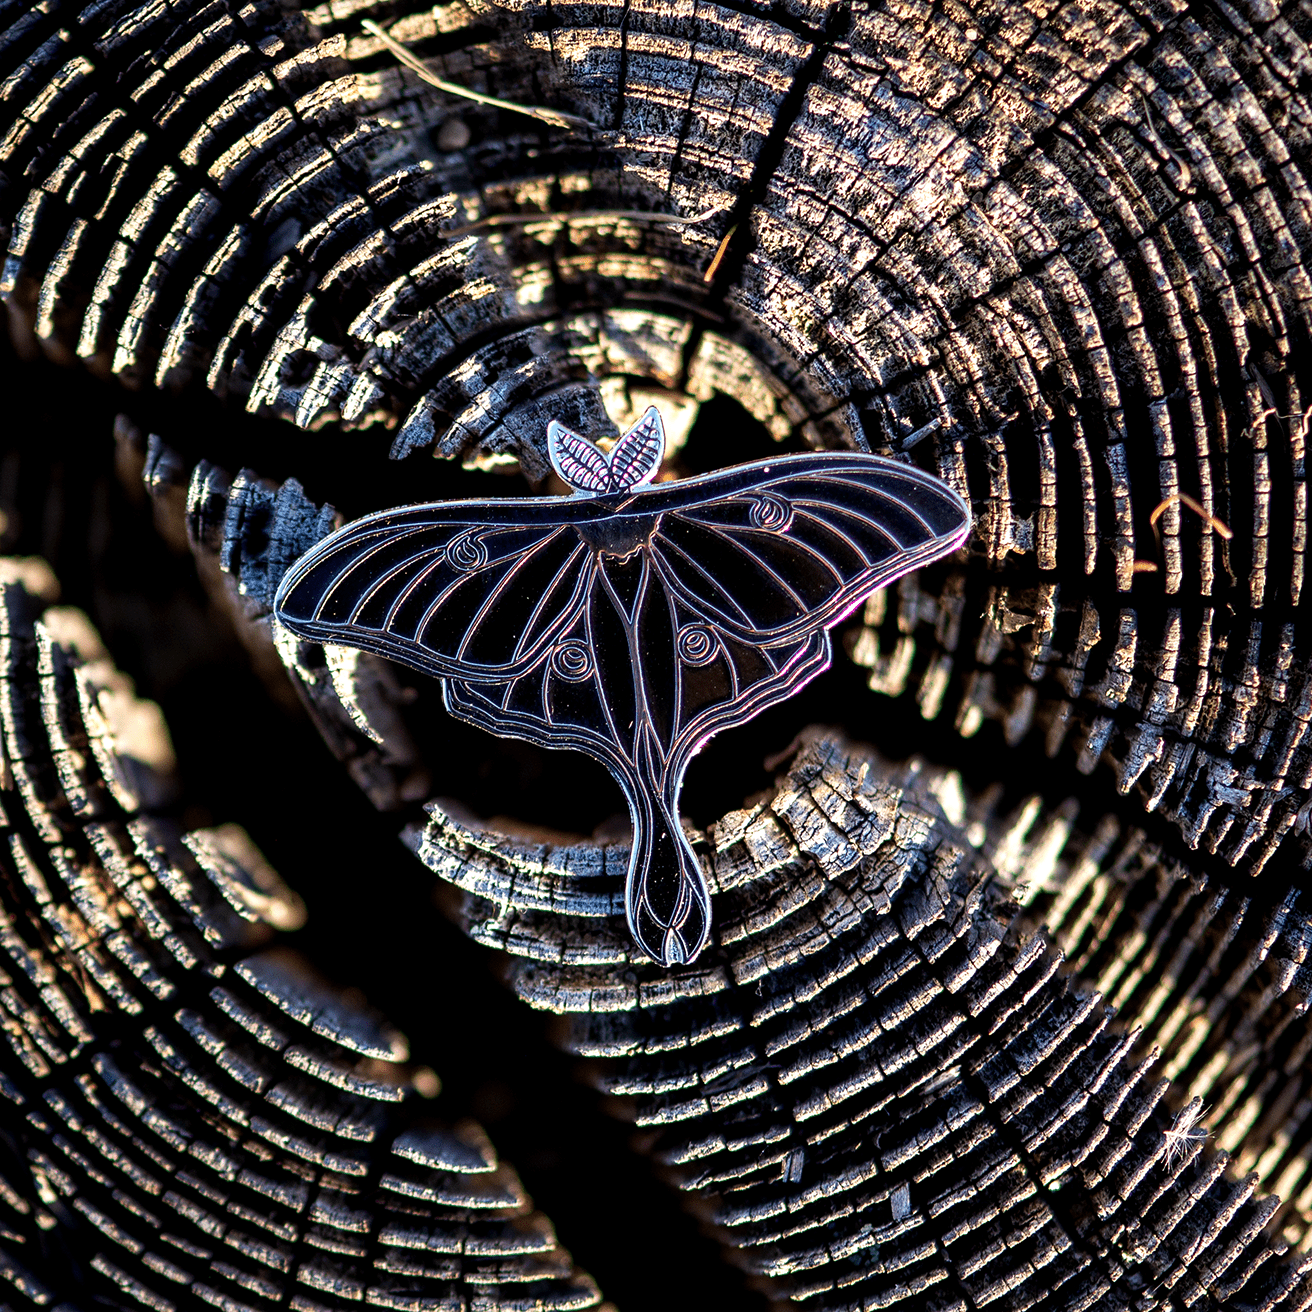 Luna Moth Enamel Pin | Black & Silver by The Roving House